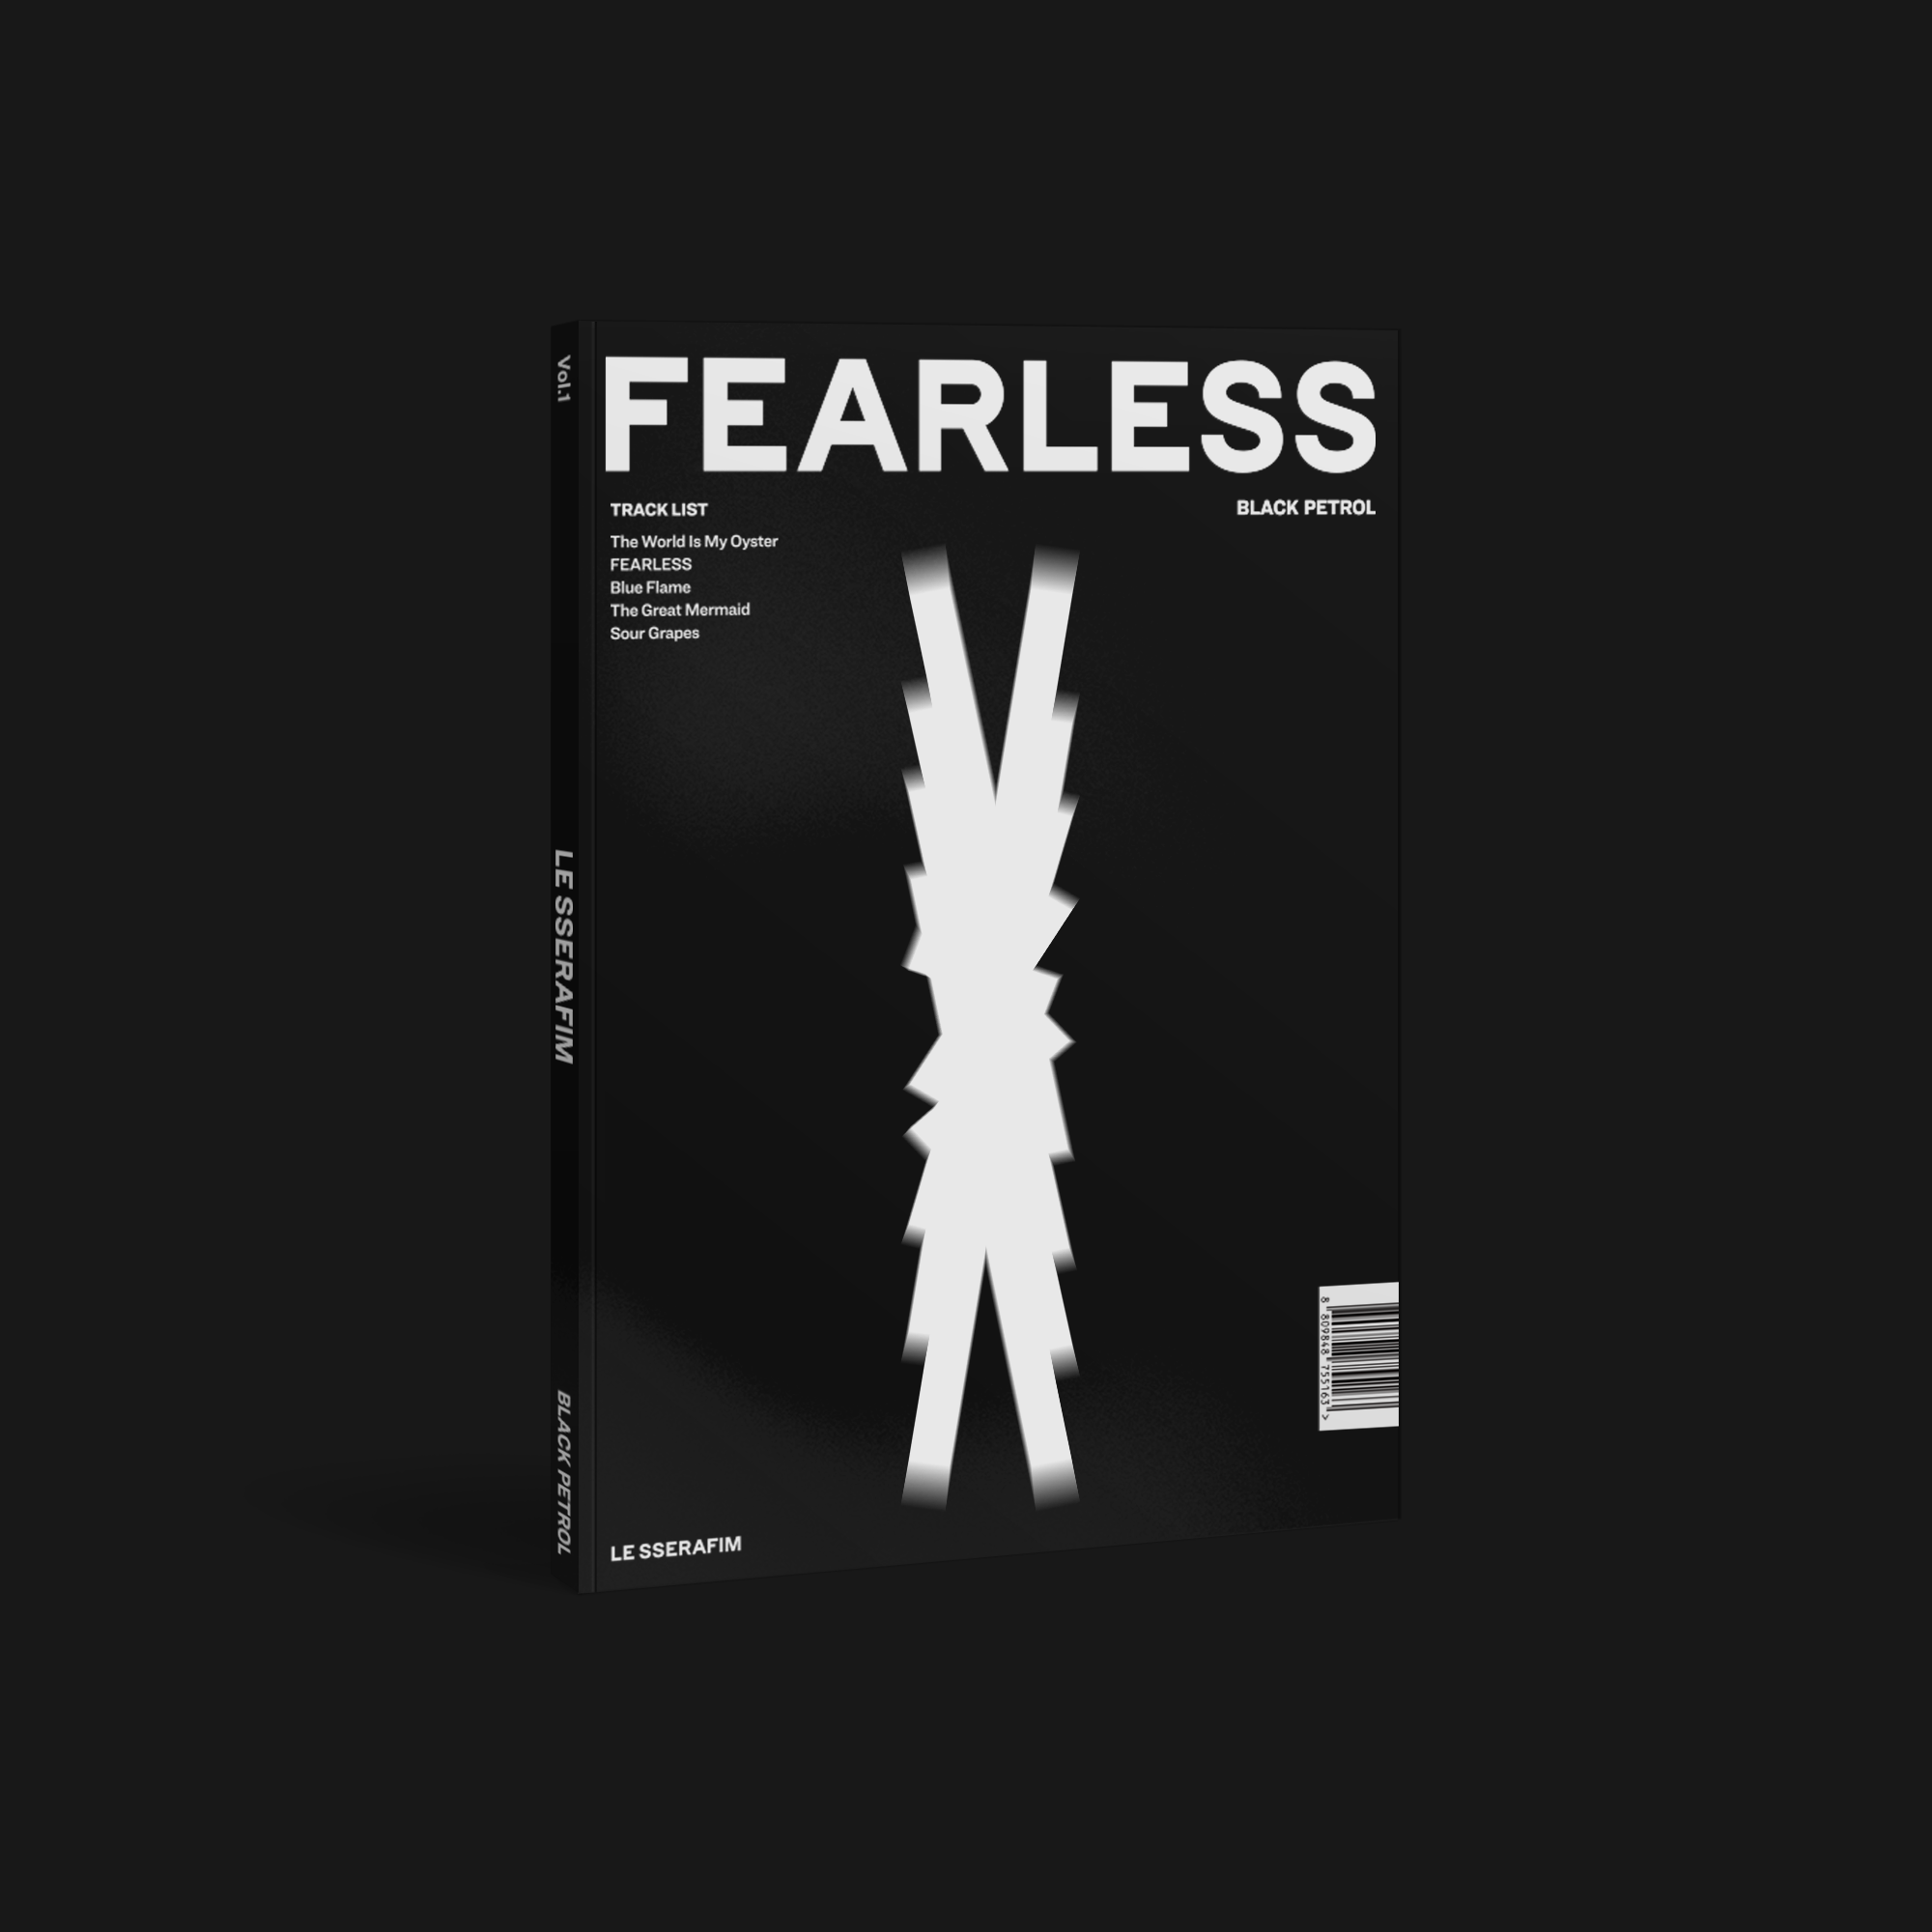 LE SSERAFIM - FEARLESS (Black Petrol Version): CD Box Set